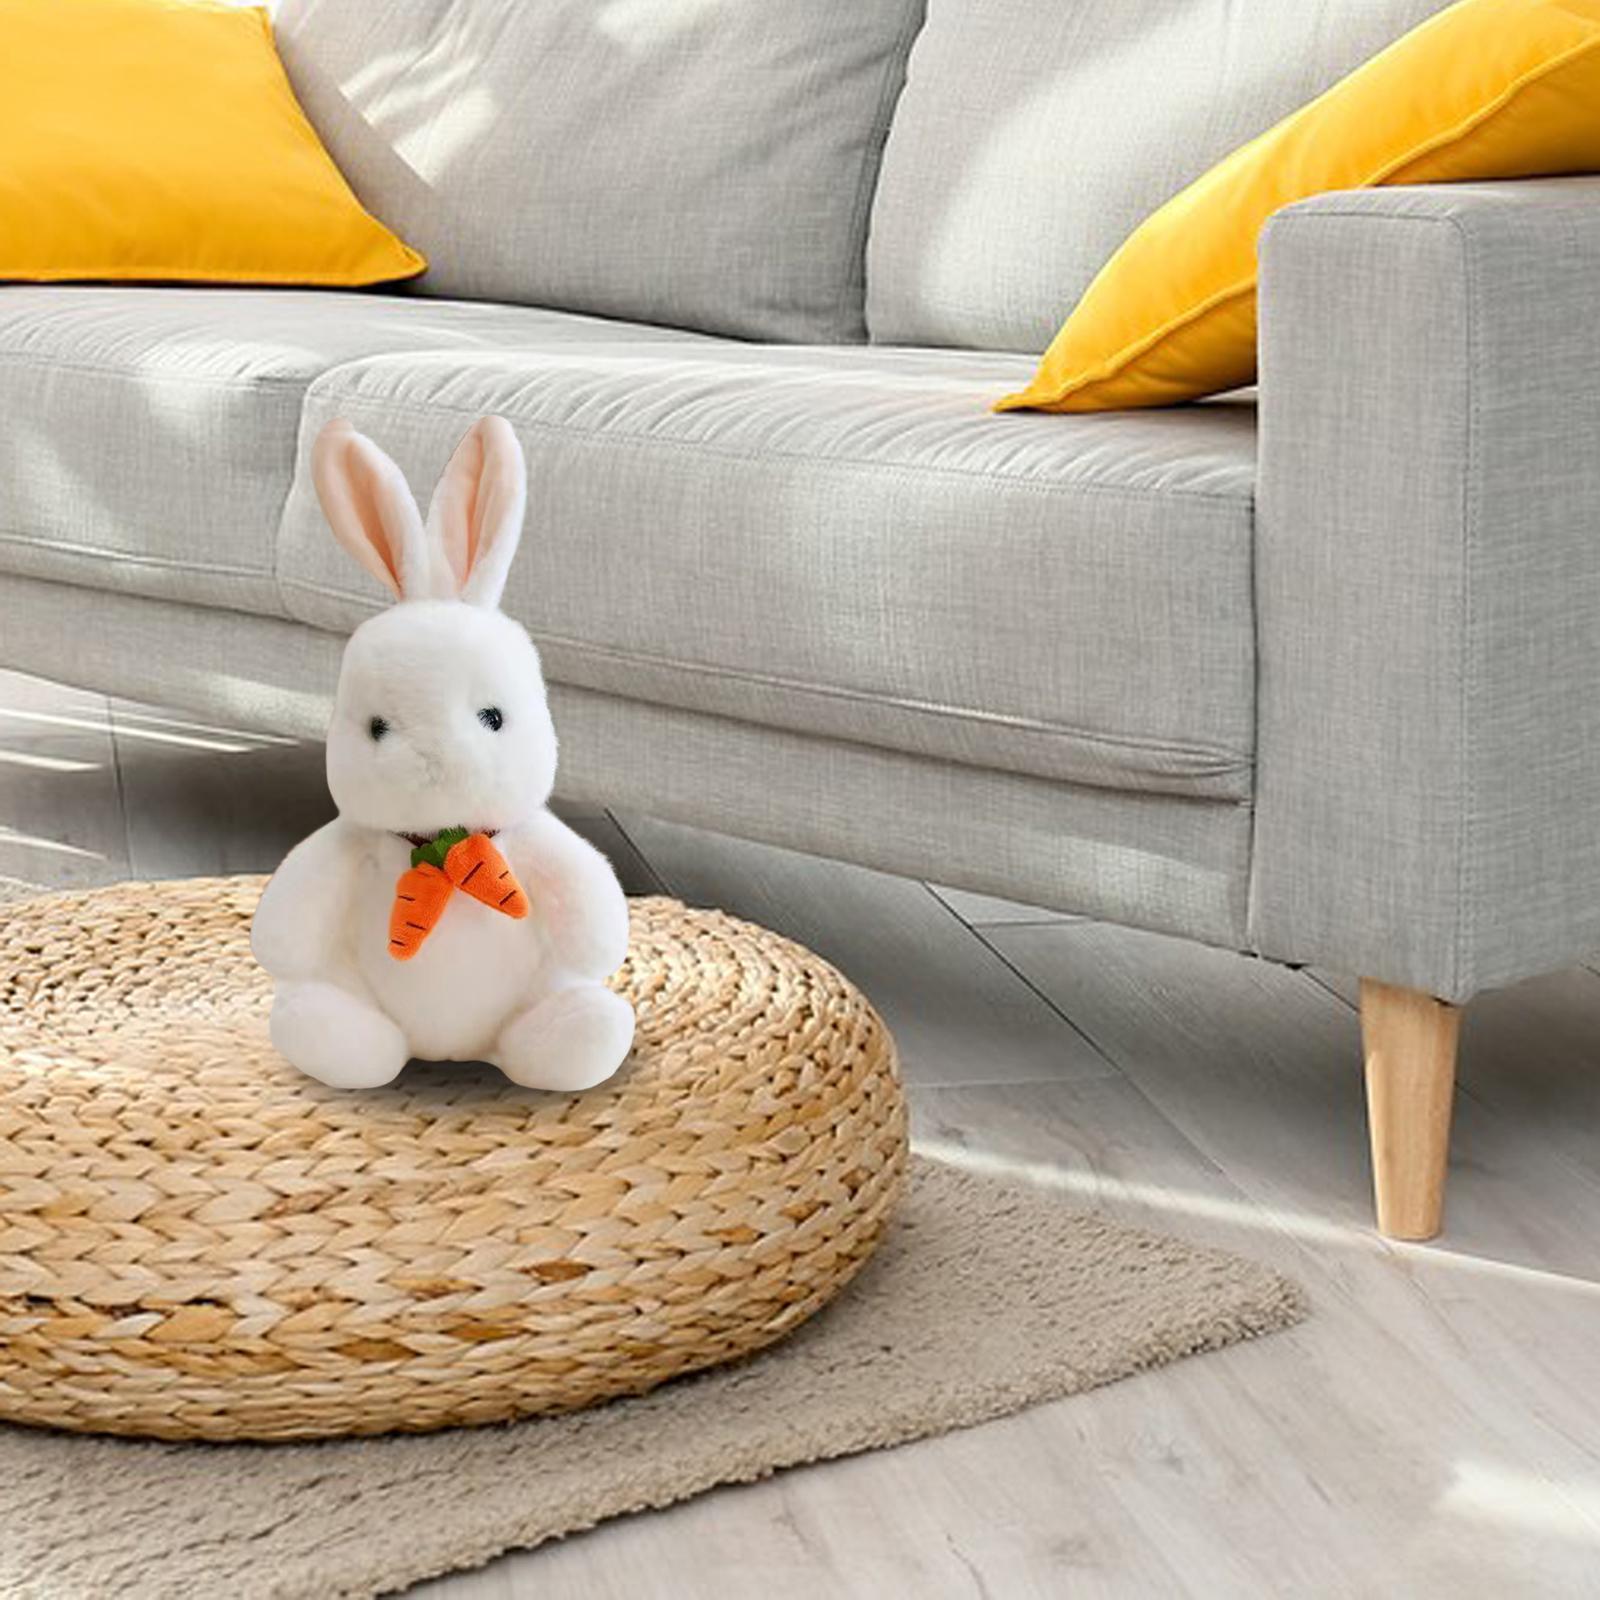 Stuffed Animals Carrot Scarf Soft Plush Rabbit Doll for Sofa Decoration White